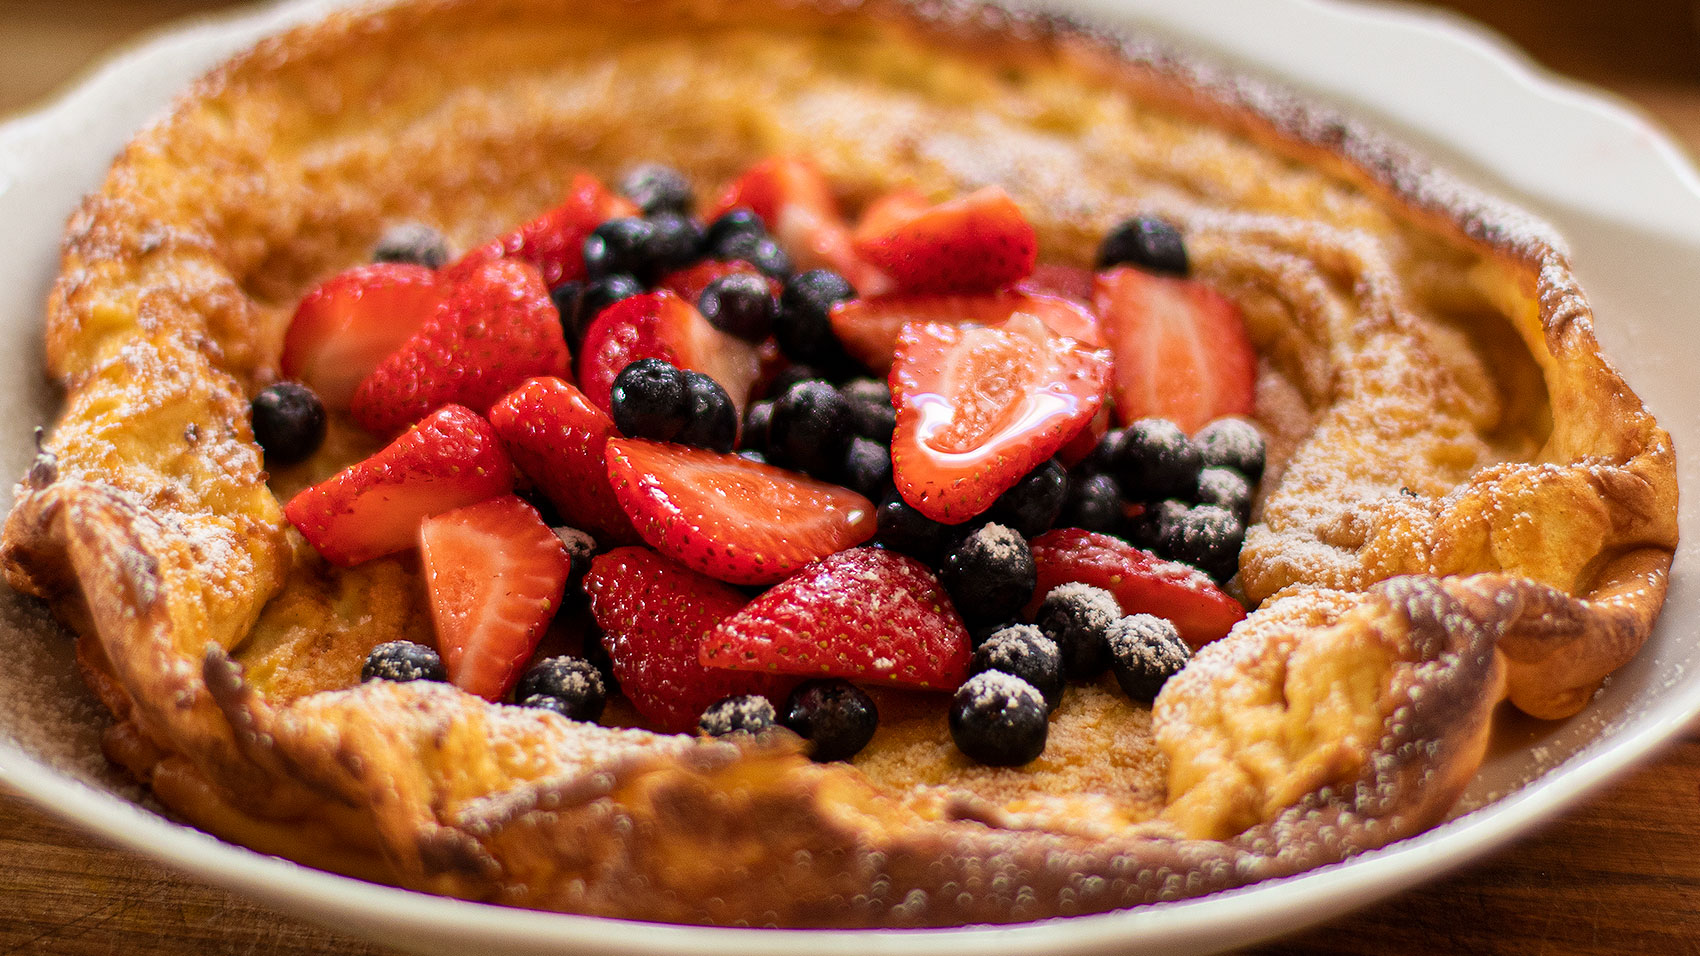 https://recipe30.com/wp-content/uploads/2021/02/Dutch-baby-pancake-berries.jpg